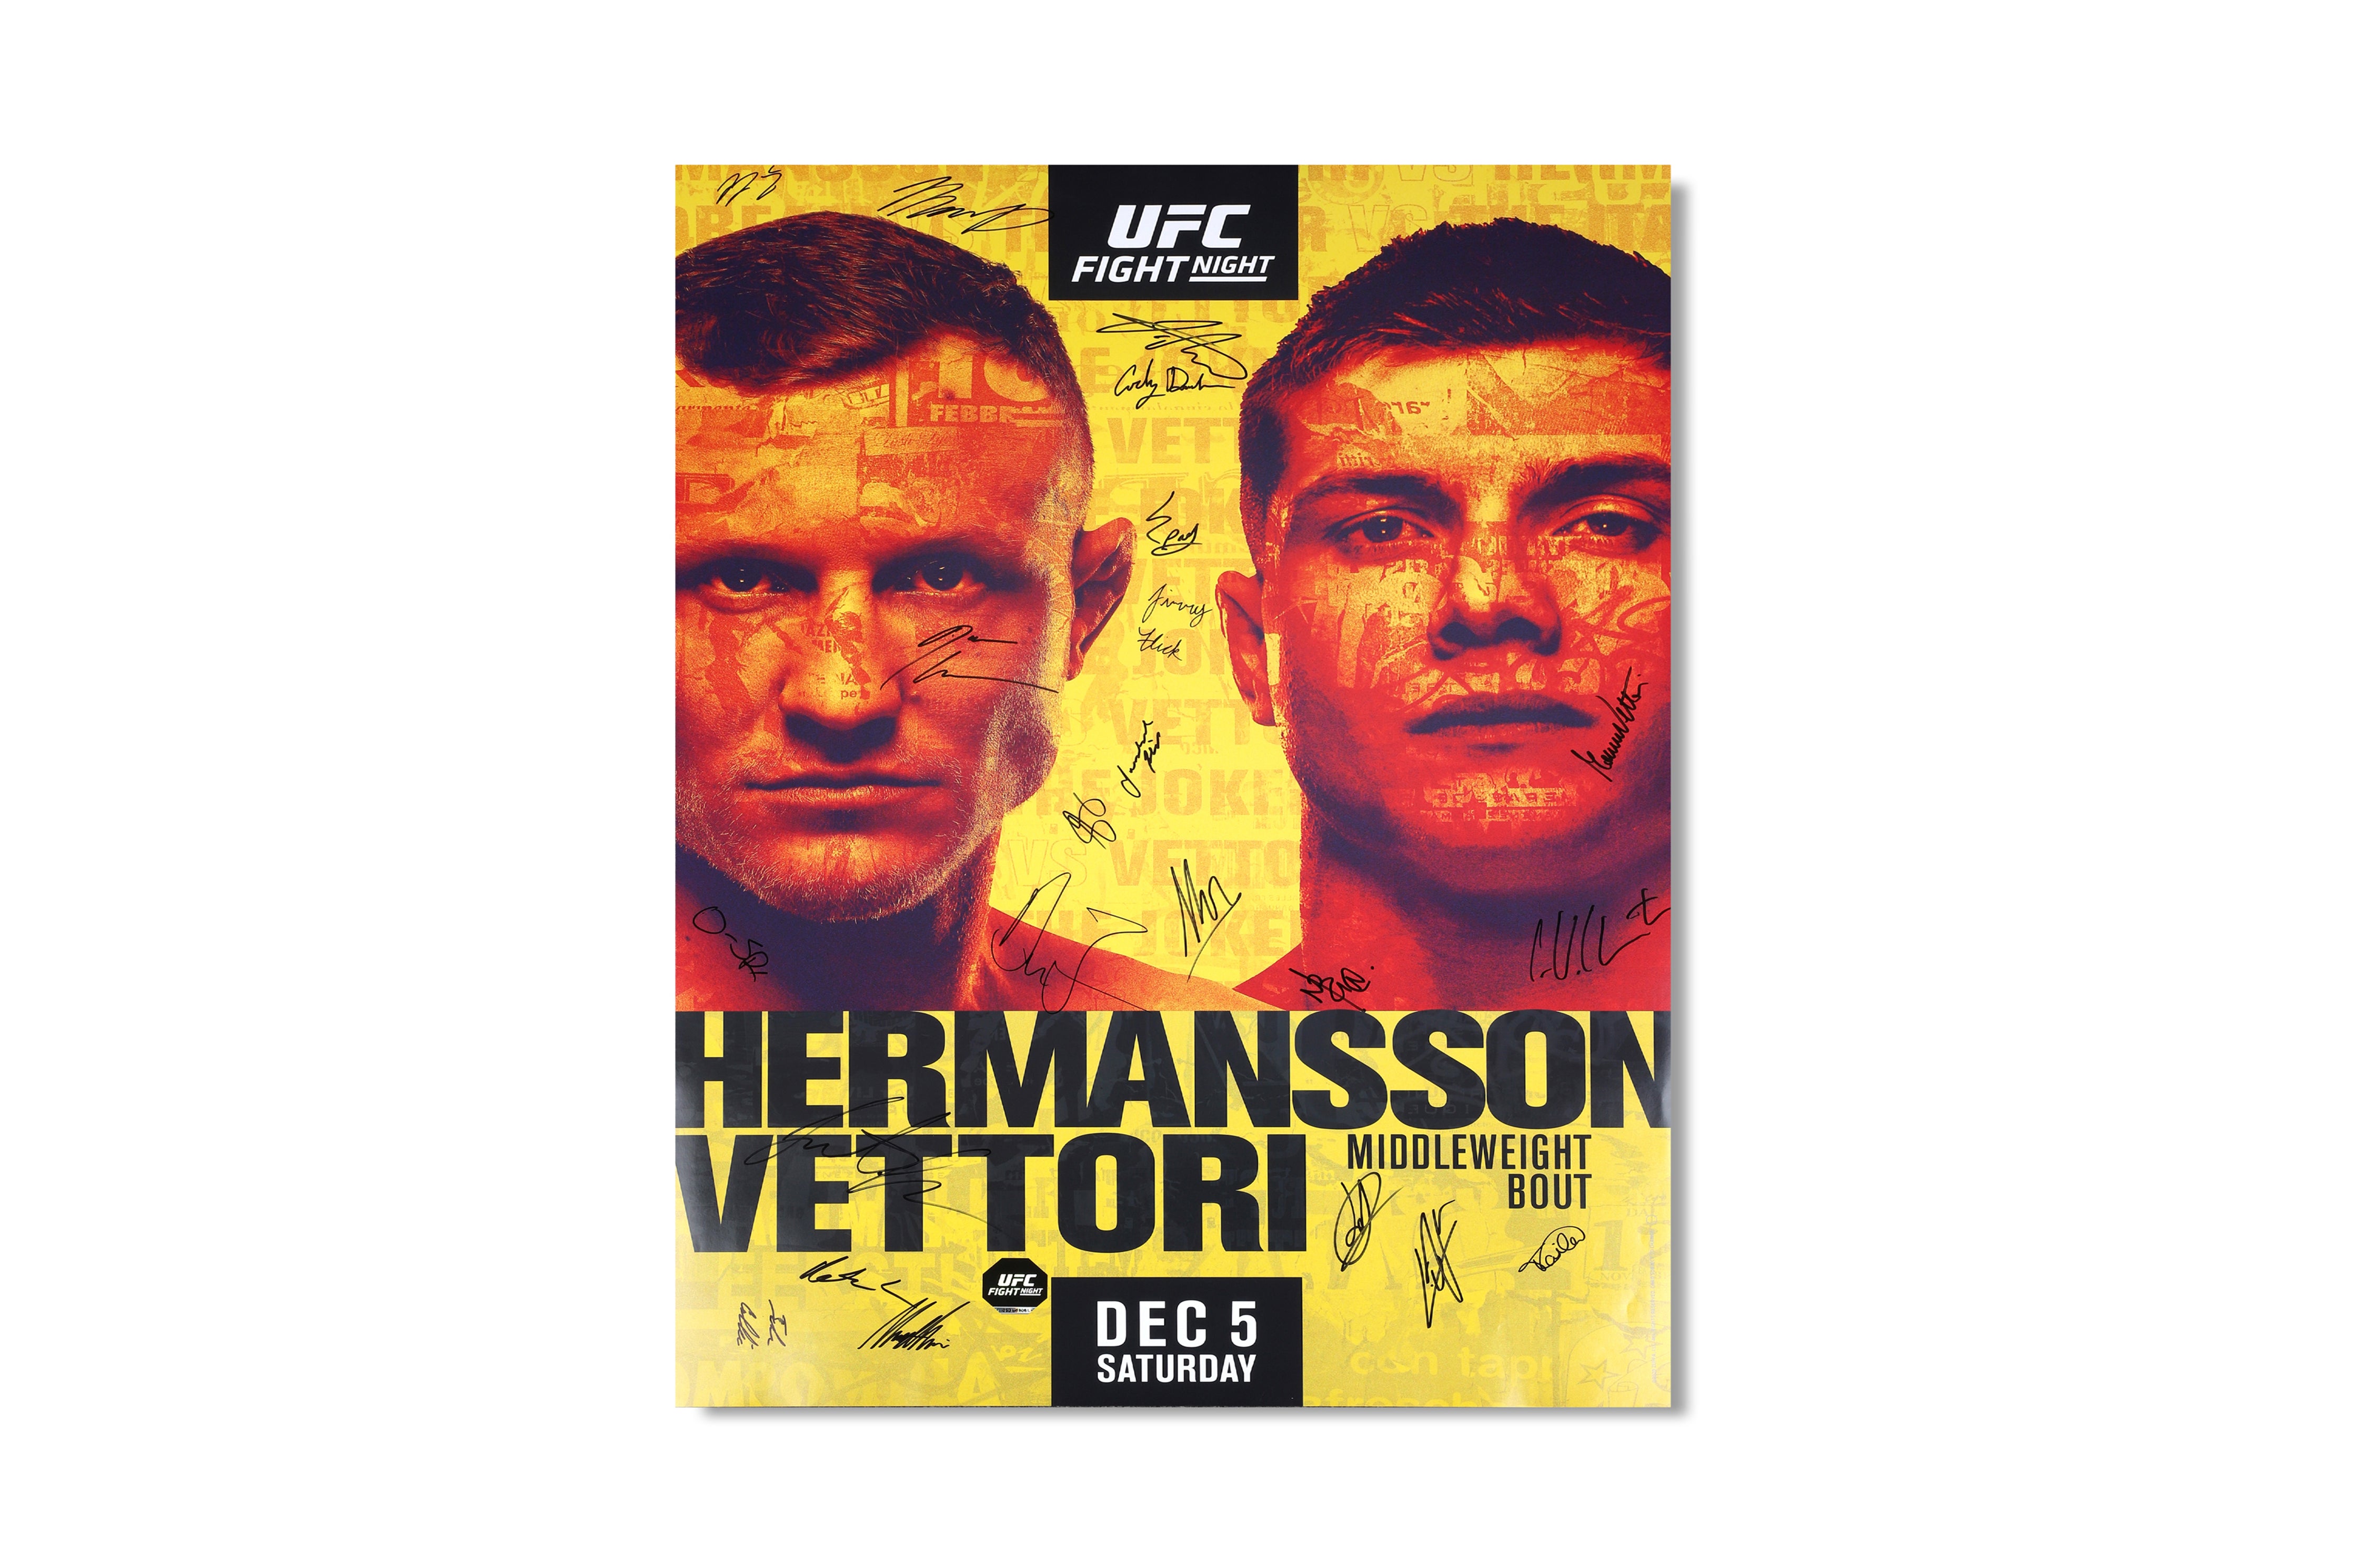 UFC Fight Night: Hermansson vs Vettori Autographed Event Poster